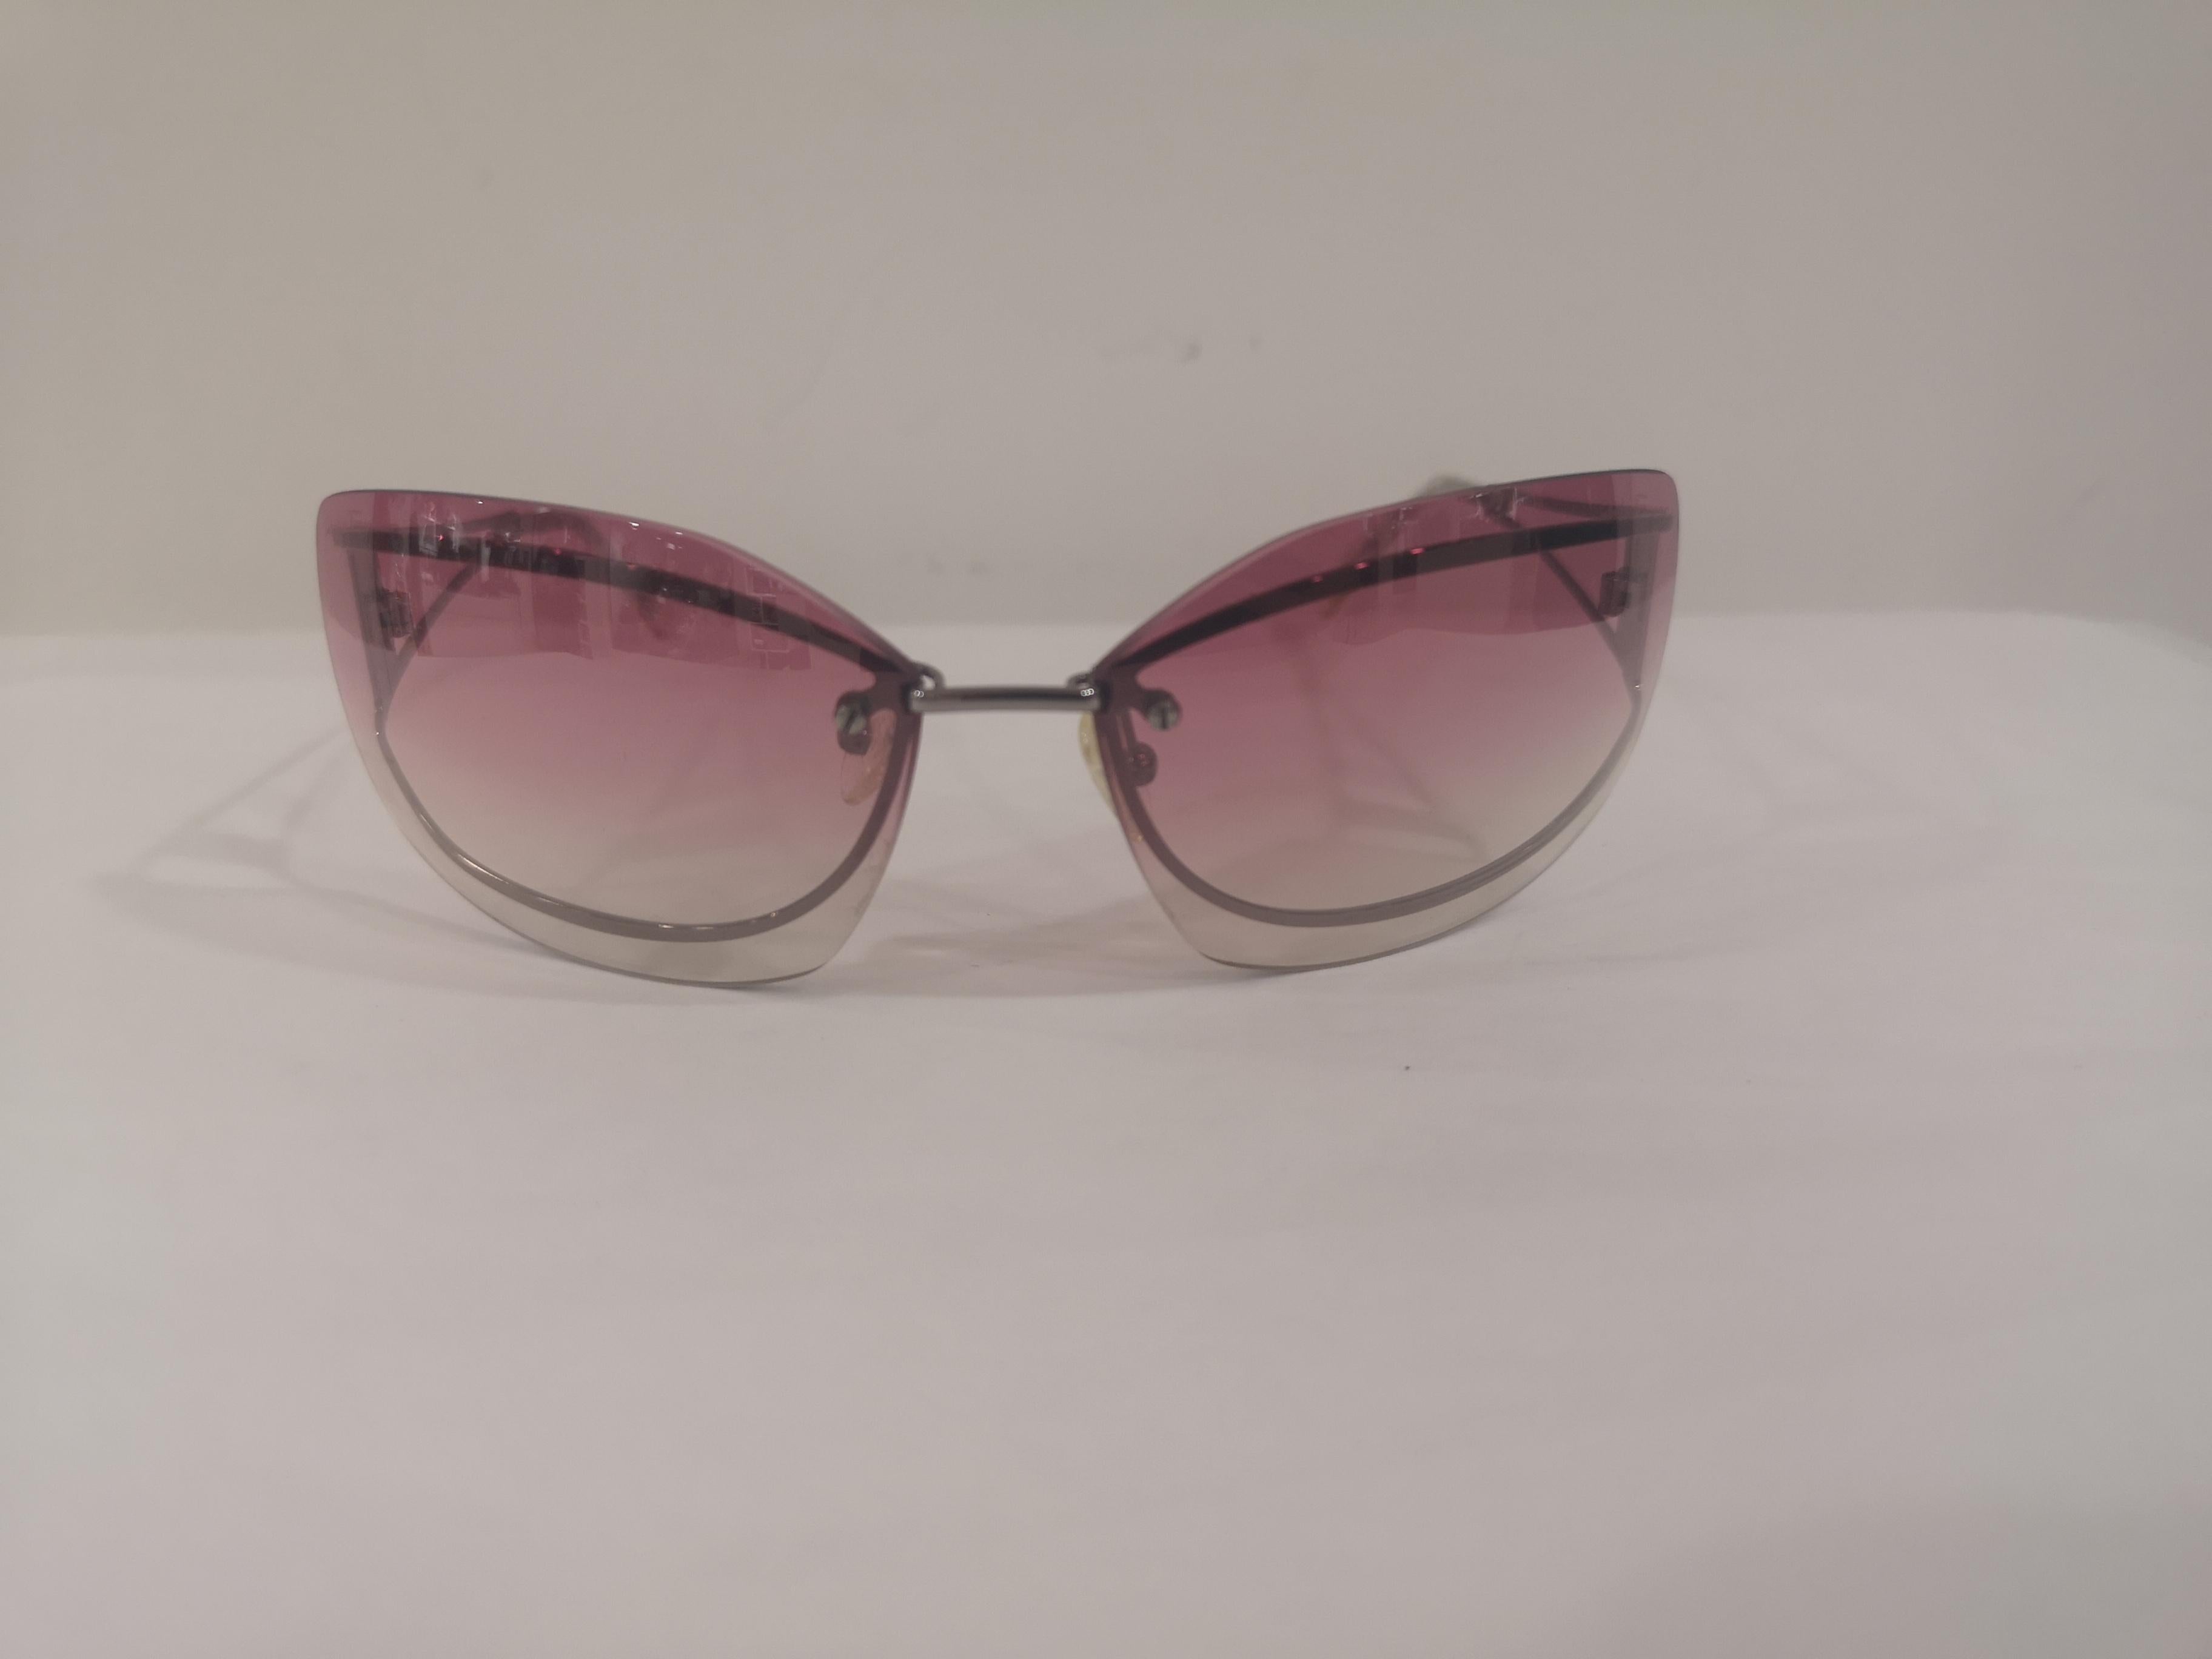 Women's Salvatore Ferragamo pink sunglasses NWOT